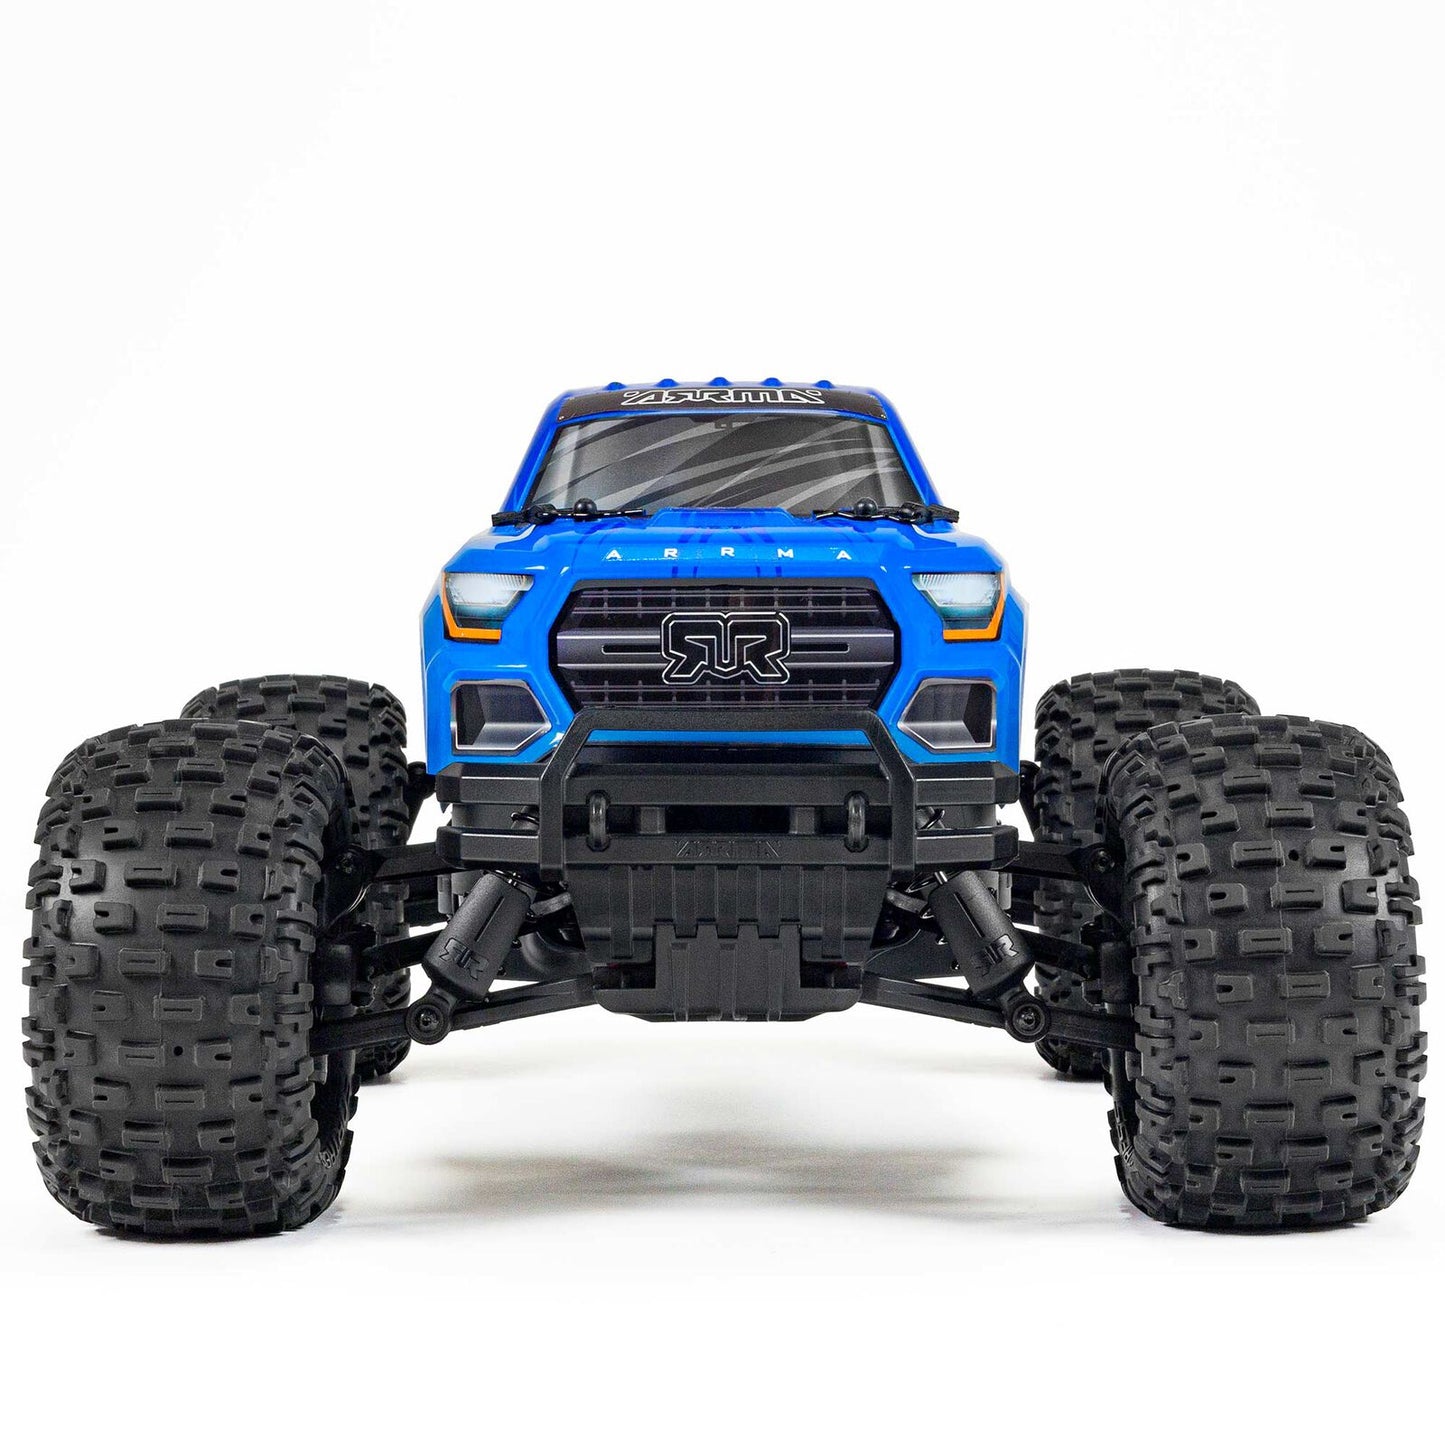 1/10 GRANITE 4X2 BOOST MEGA 550 Brushed Monster Truck RTR, Blue